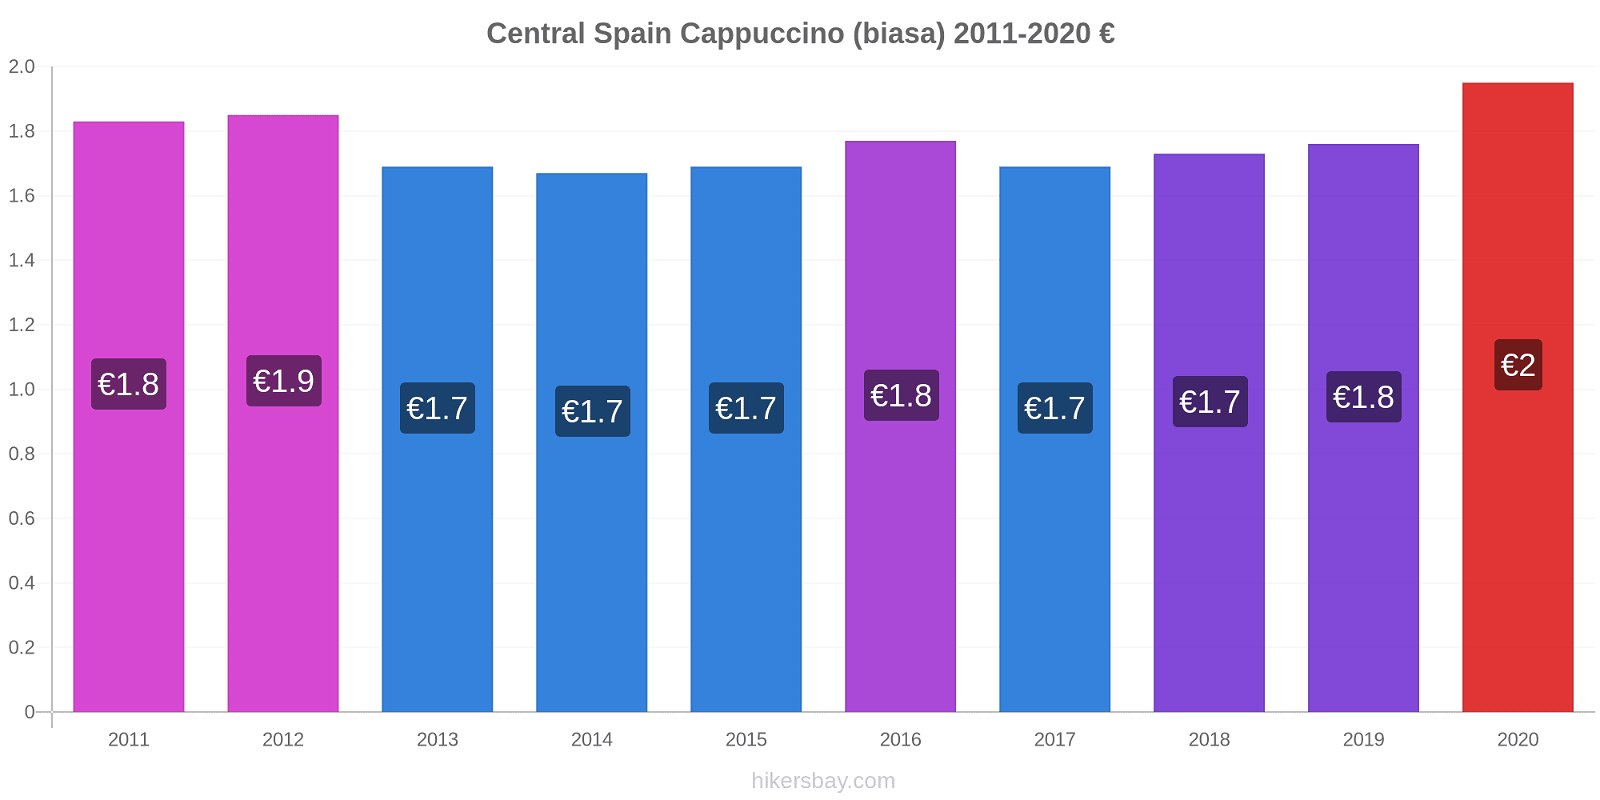 Central Spain perubahan harga Cappuccino (biasa) hikersbay.com